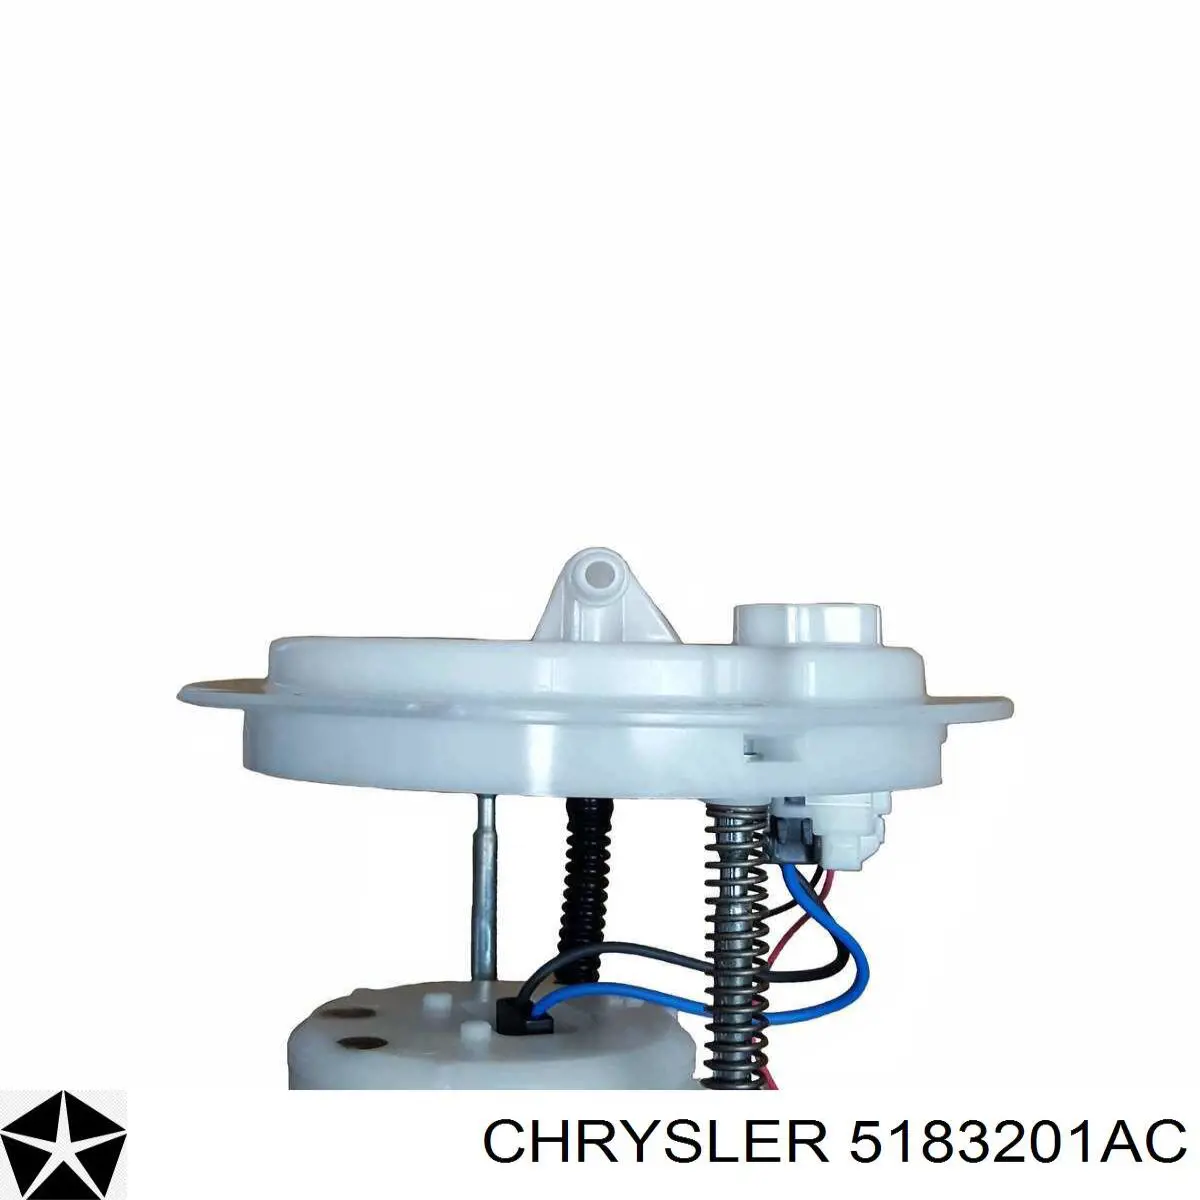 5183201AC Chrysler 